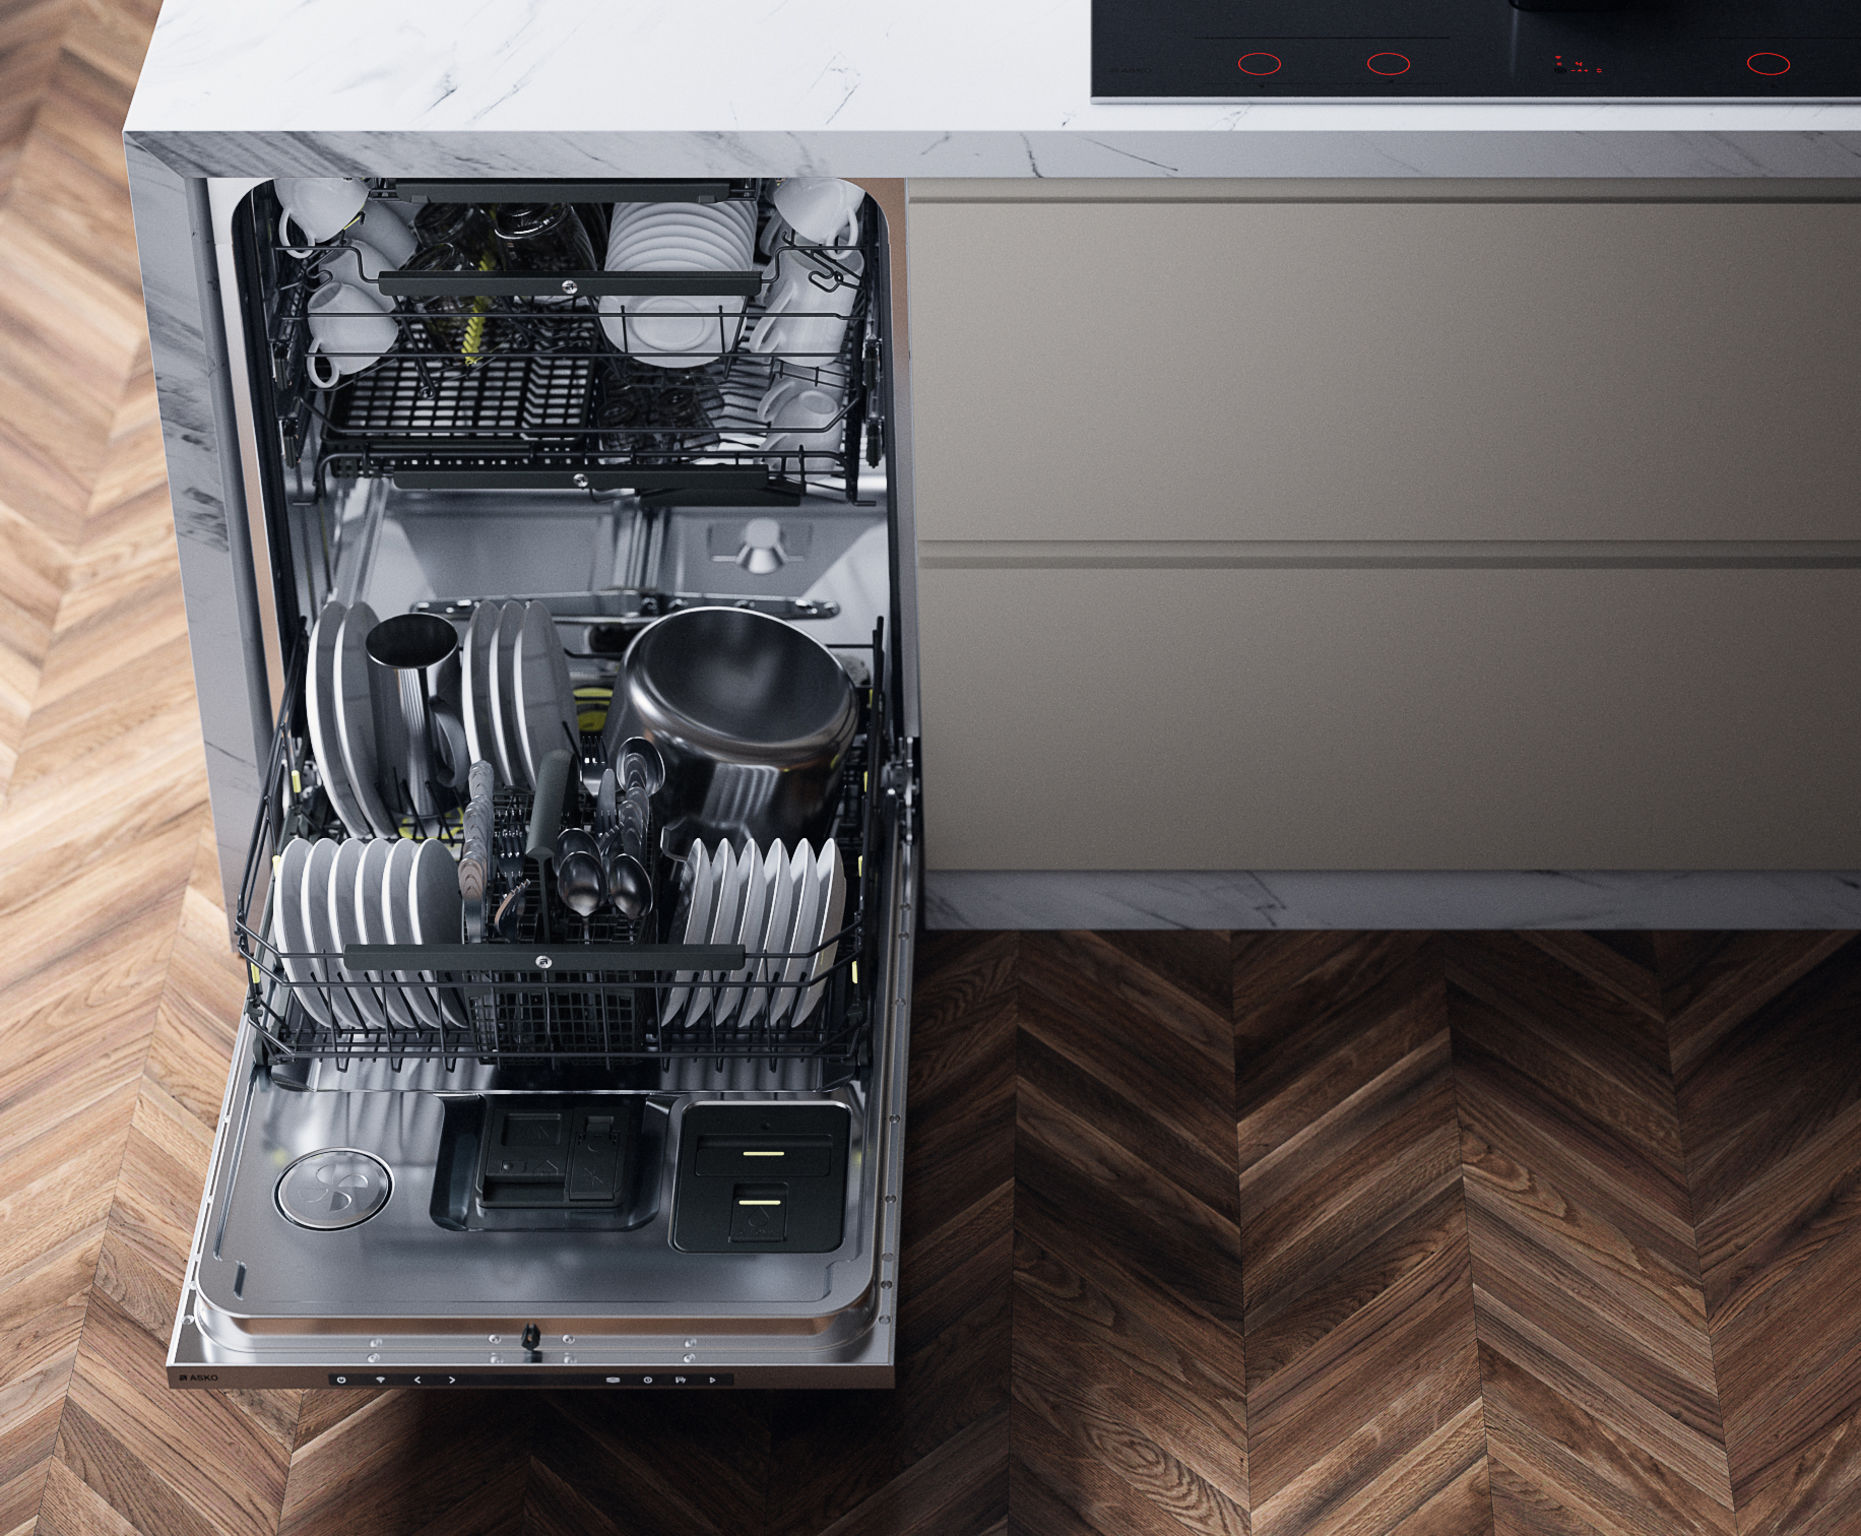 ASKO D700 dishwasher series